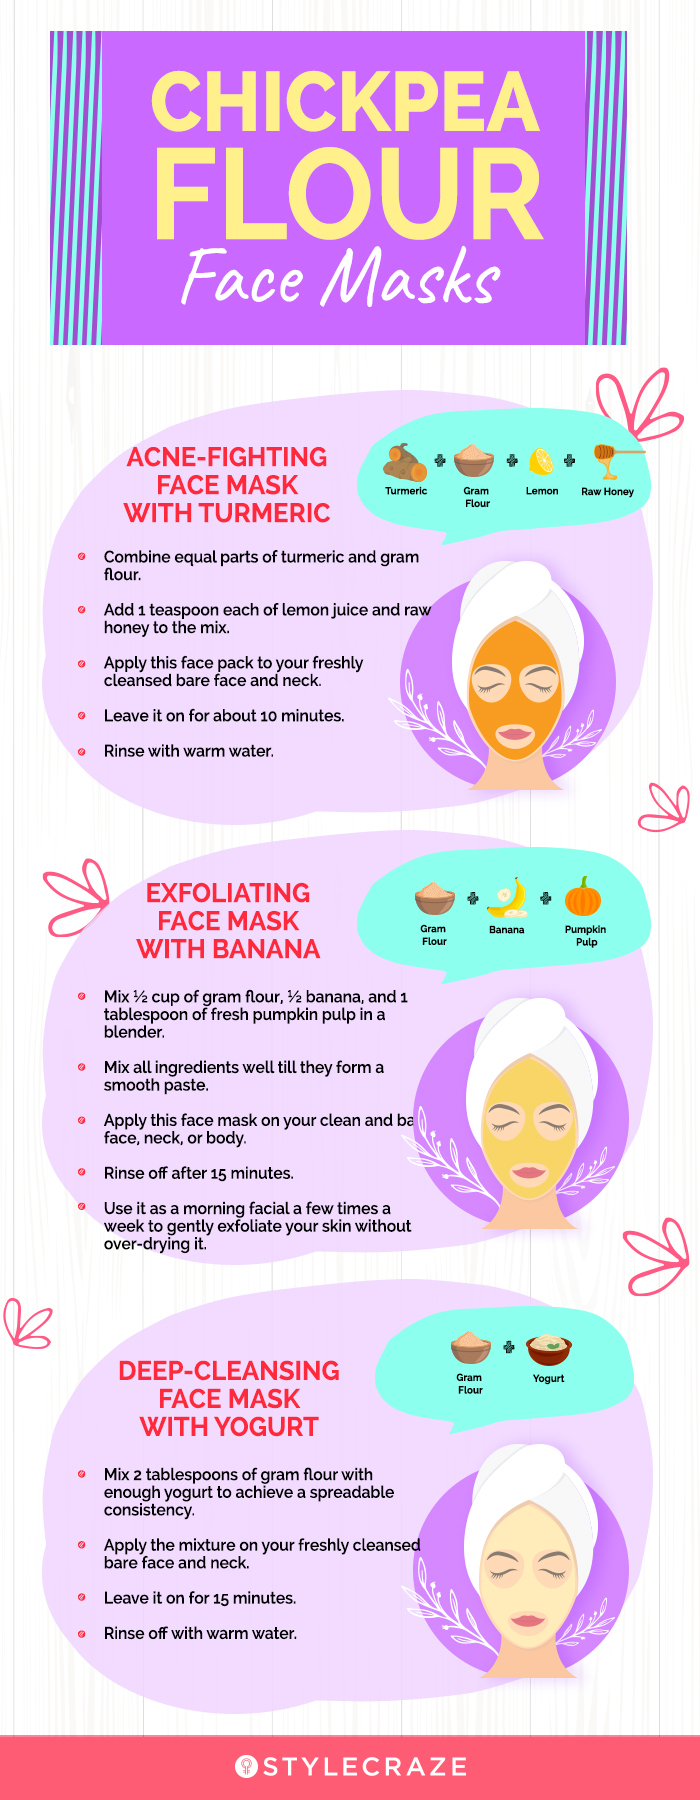 chickpea flour face masks [infographic]